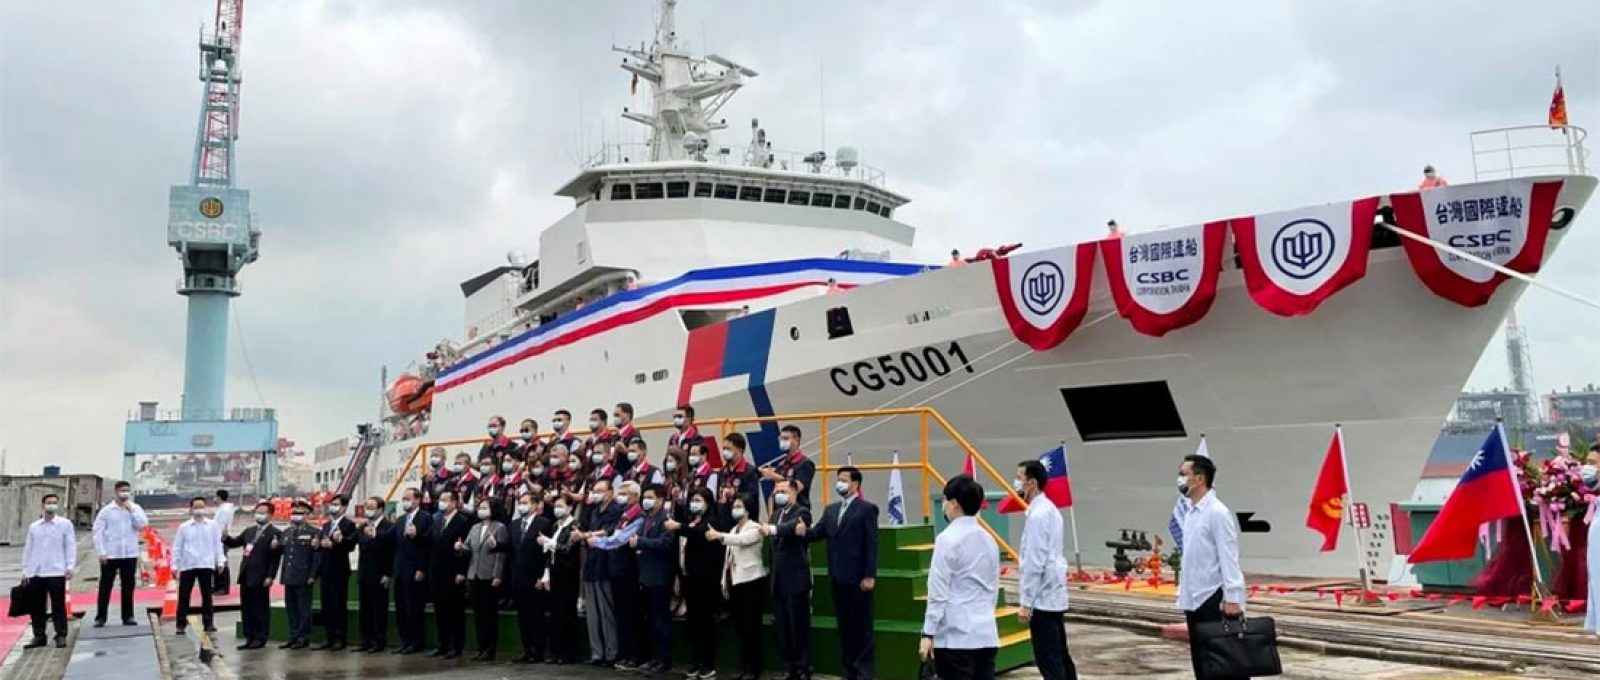 A presidente taiwanesa, Tsai Ing-wen, esteve na cerimônia em que o Chiayi, novo navio da Guarda Costeira de Taiwan, foi comissionado no porto de Kaohsiung (Foto: Reuters).